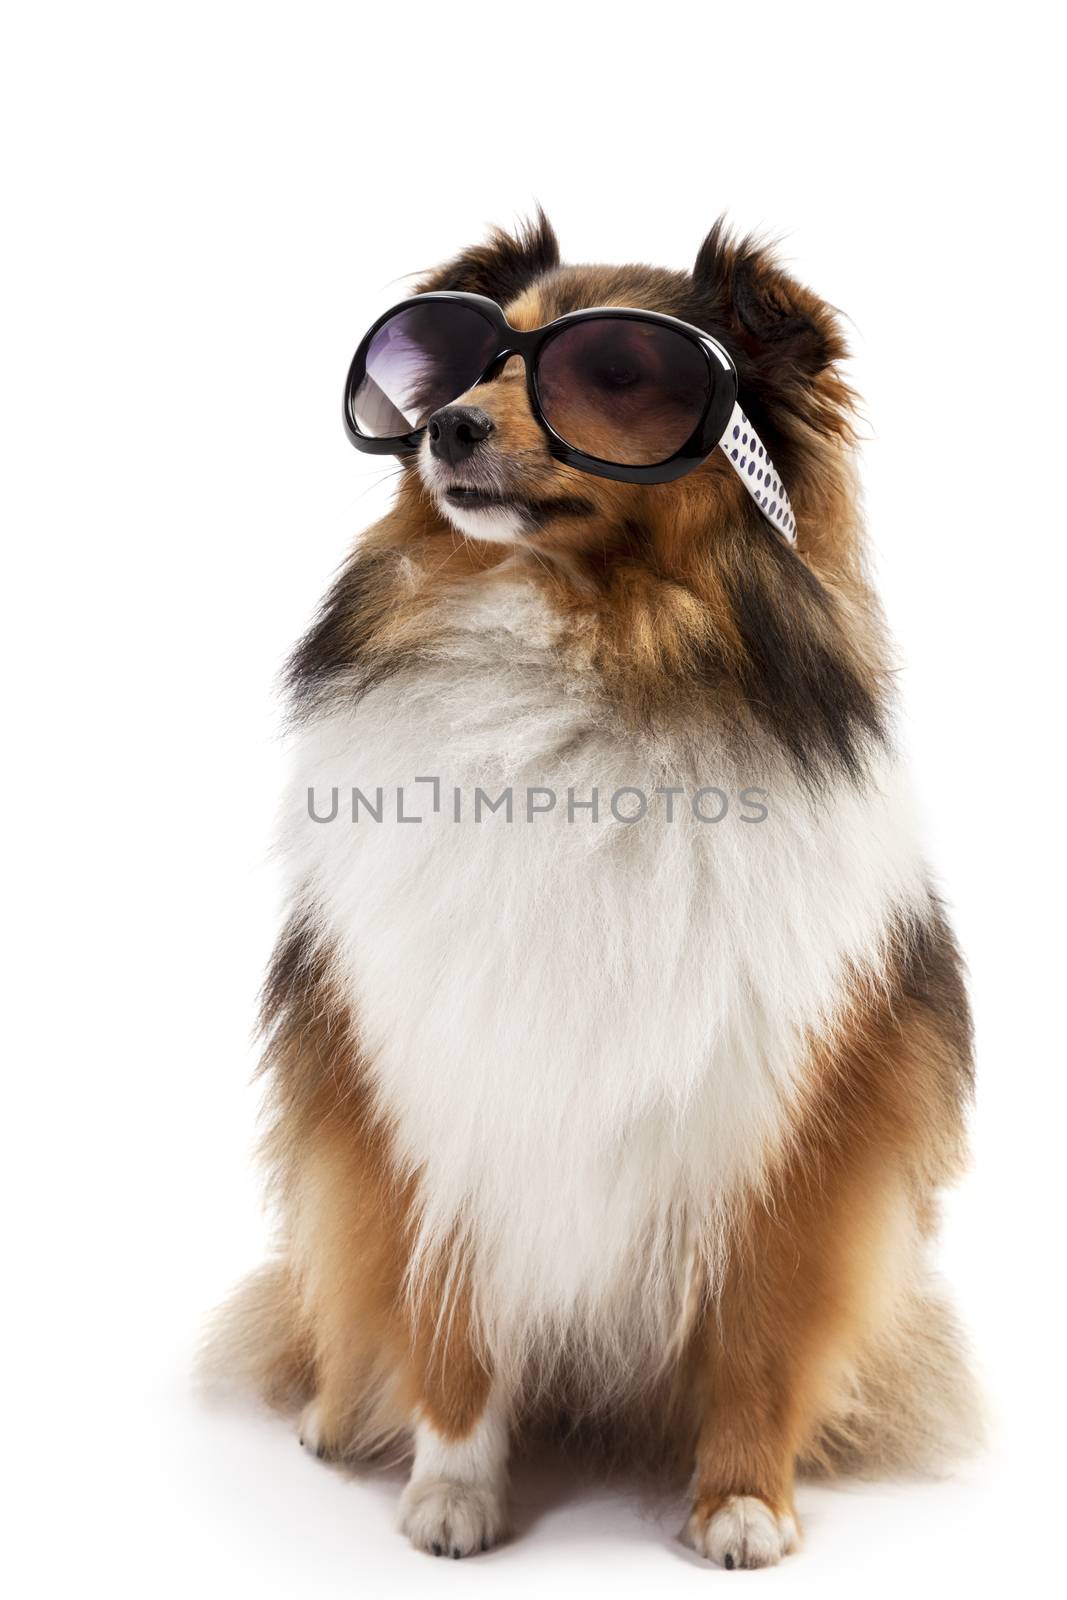 Shetland sheepdog wearing sunglasses by Aarstudio